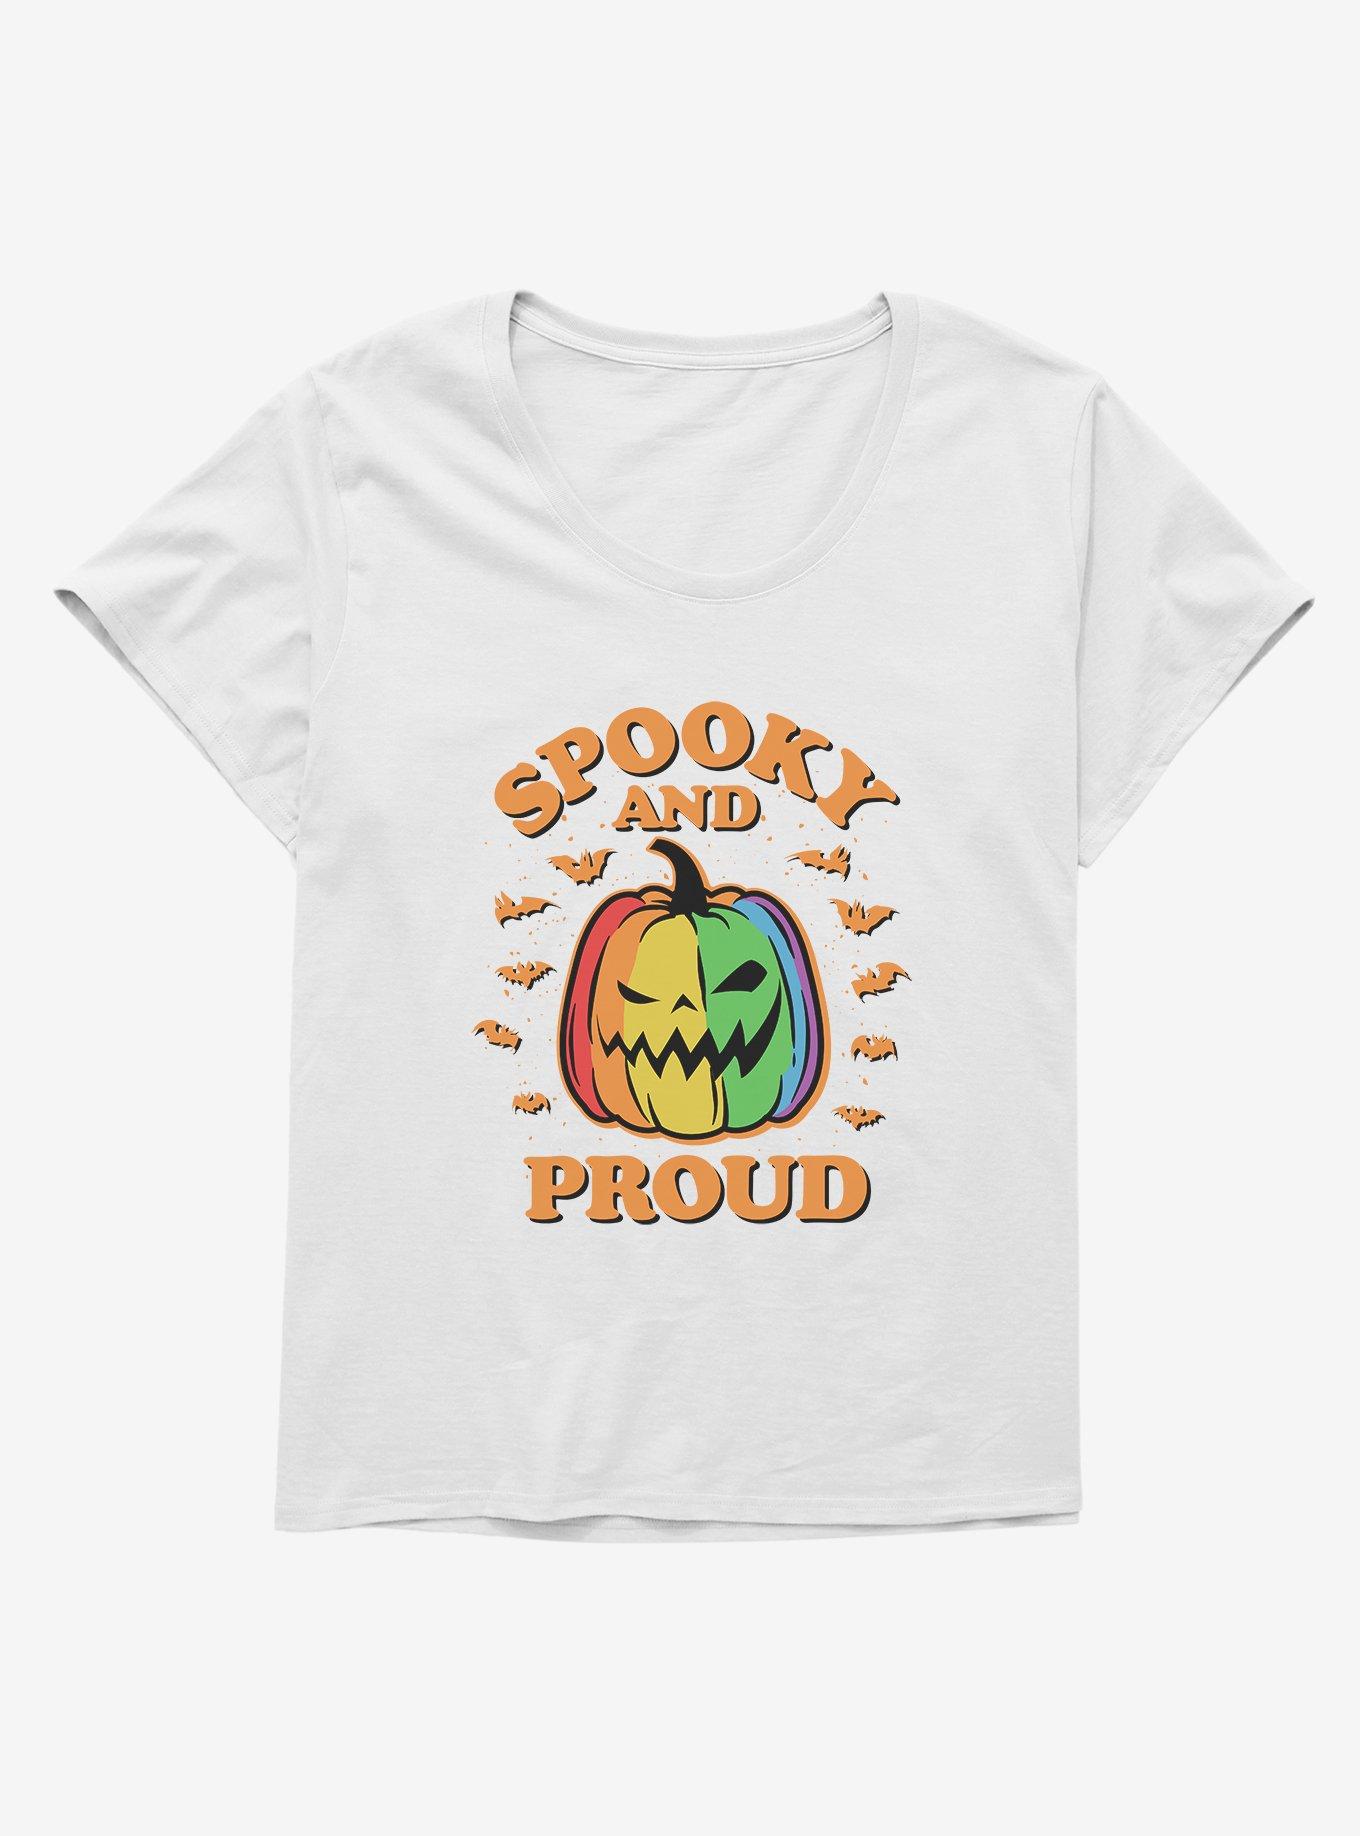 Hot Topic Spooky And Proud Rainbow Jack-O'-Lantern Girls T-Shirt Plus